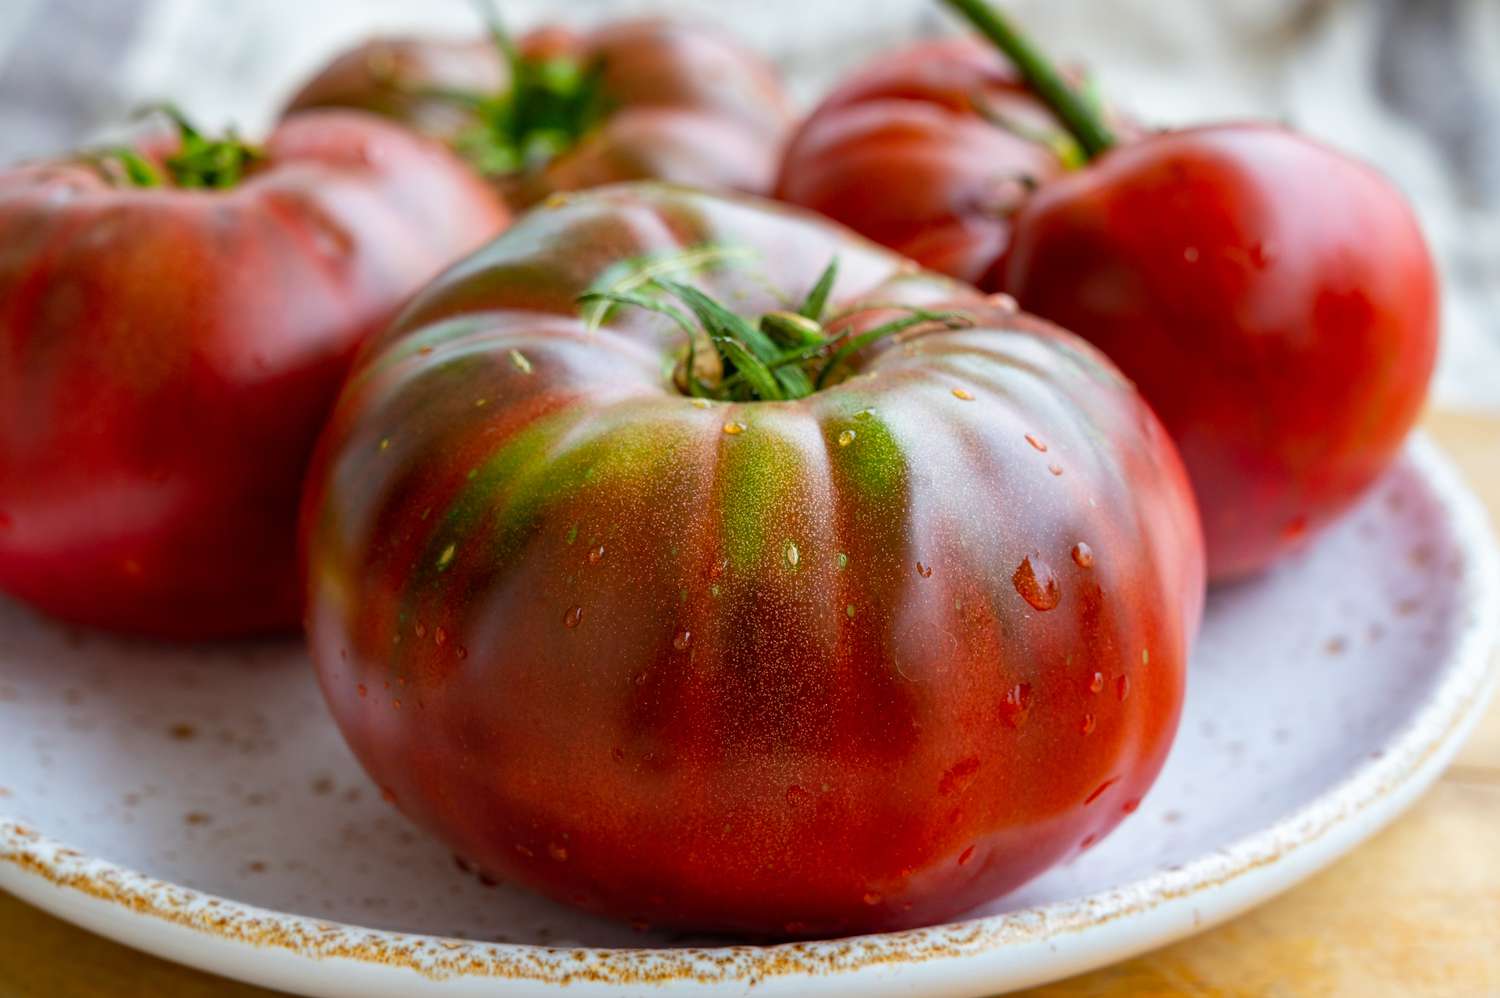 Black Krim tomatoes